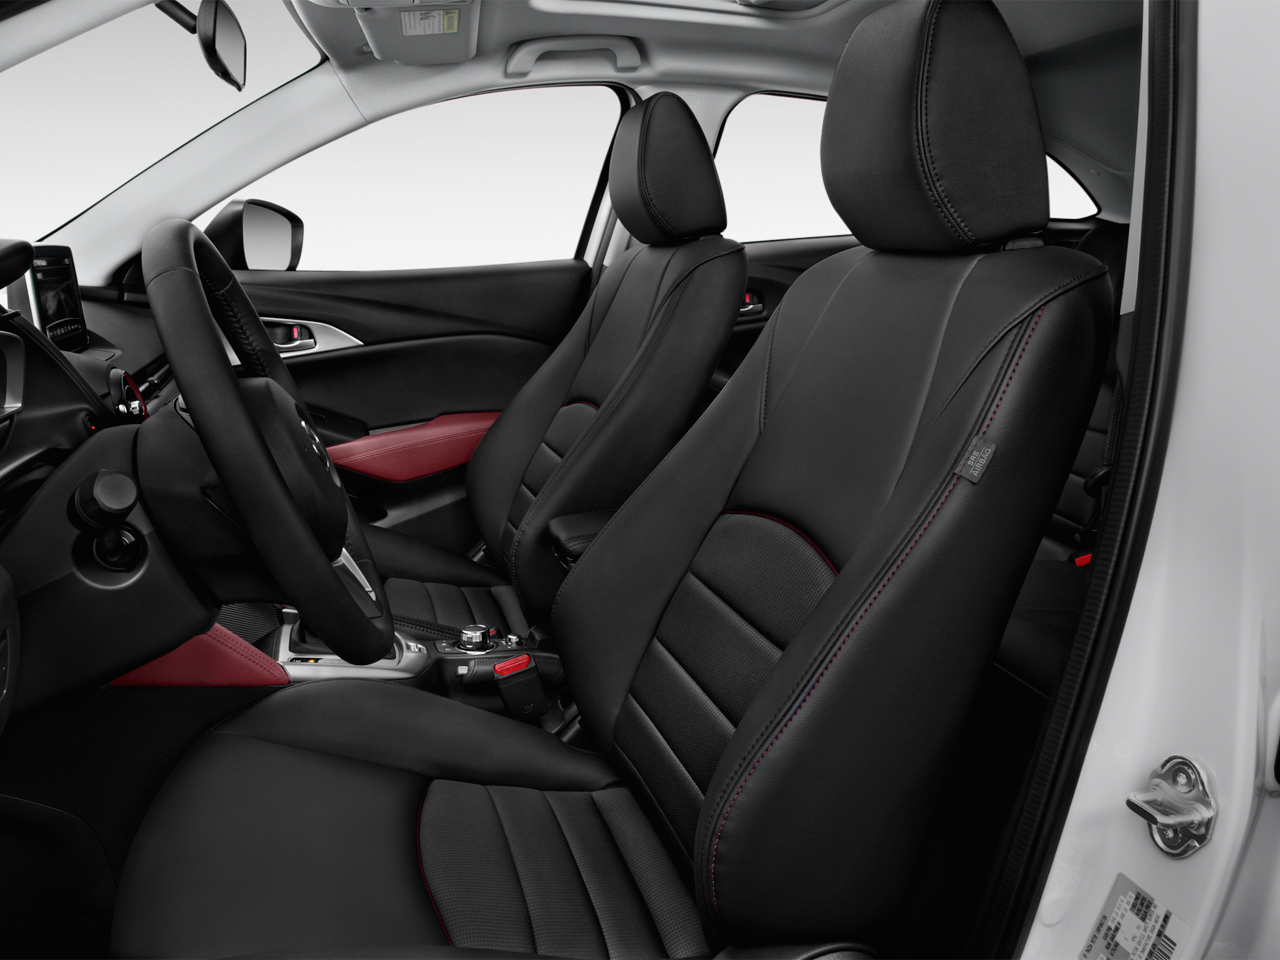 Mazda Mazda3 s Touring interior front cross view